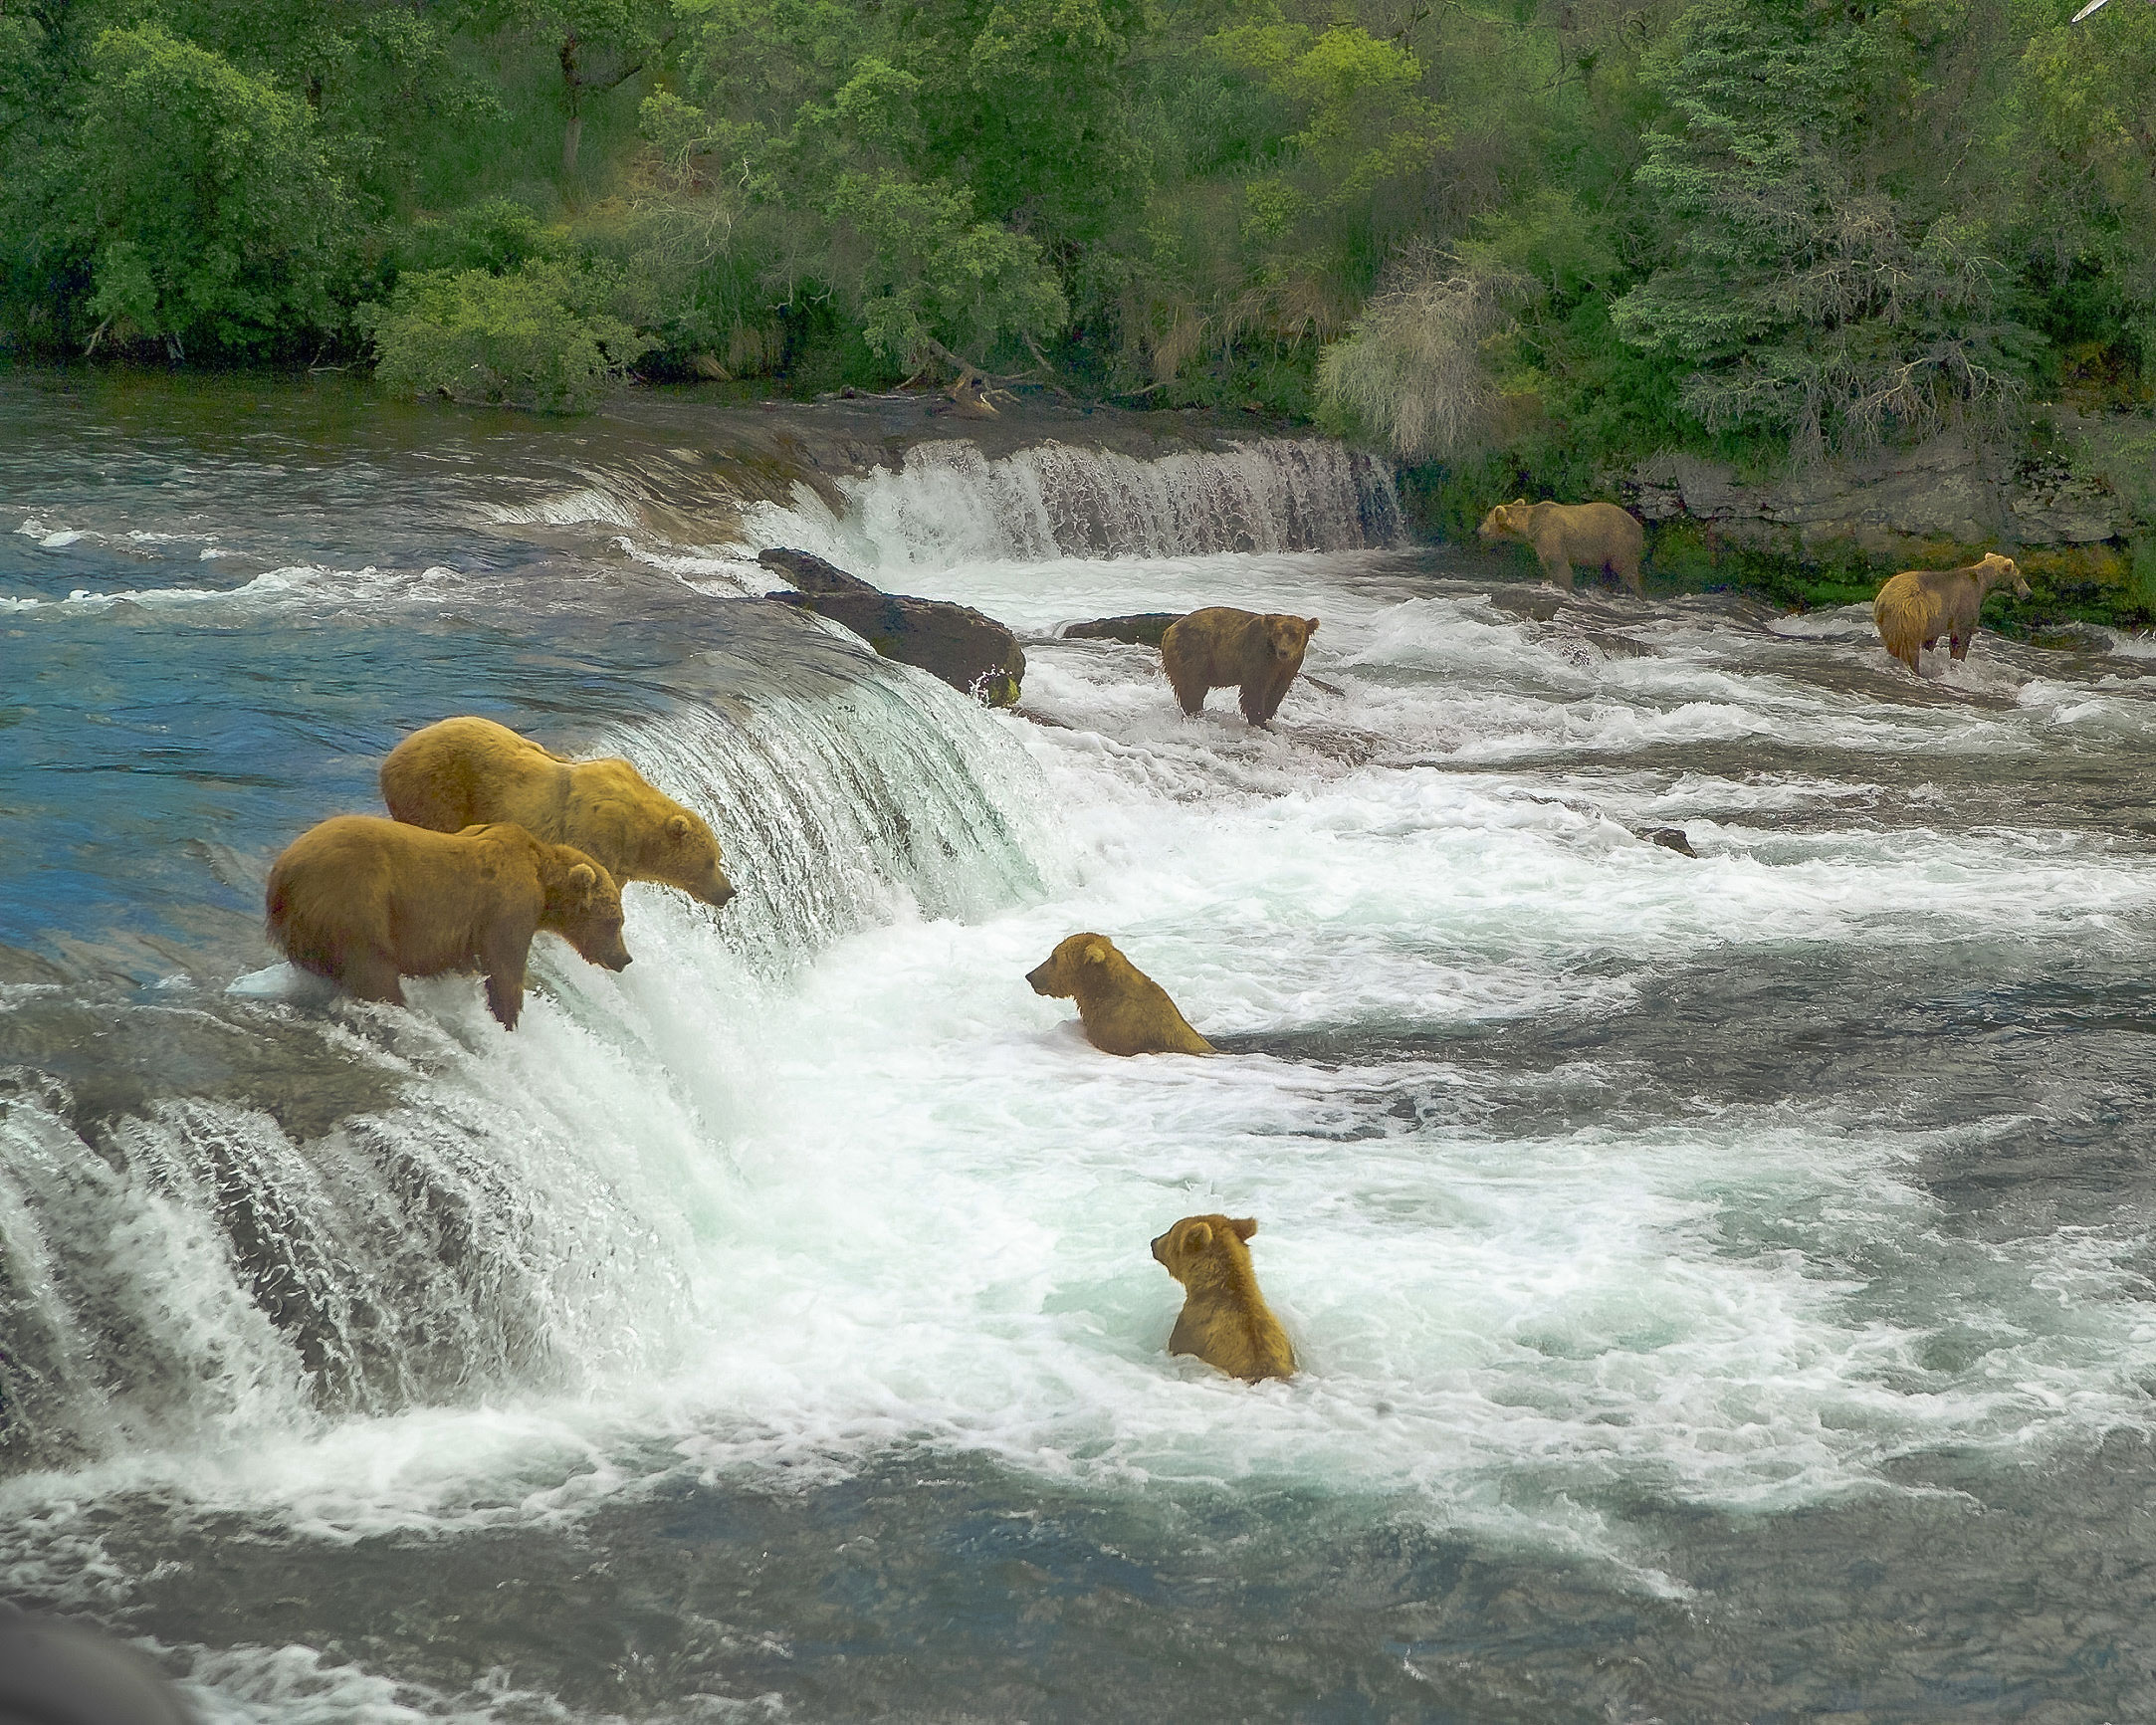 Bear watching in Alaska: bears fishing at Brook Falls in Katmai National Park.